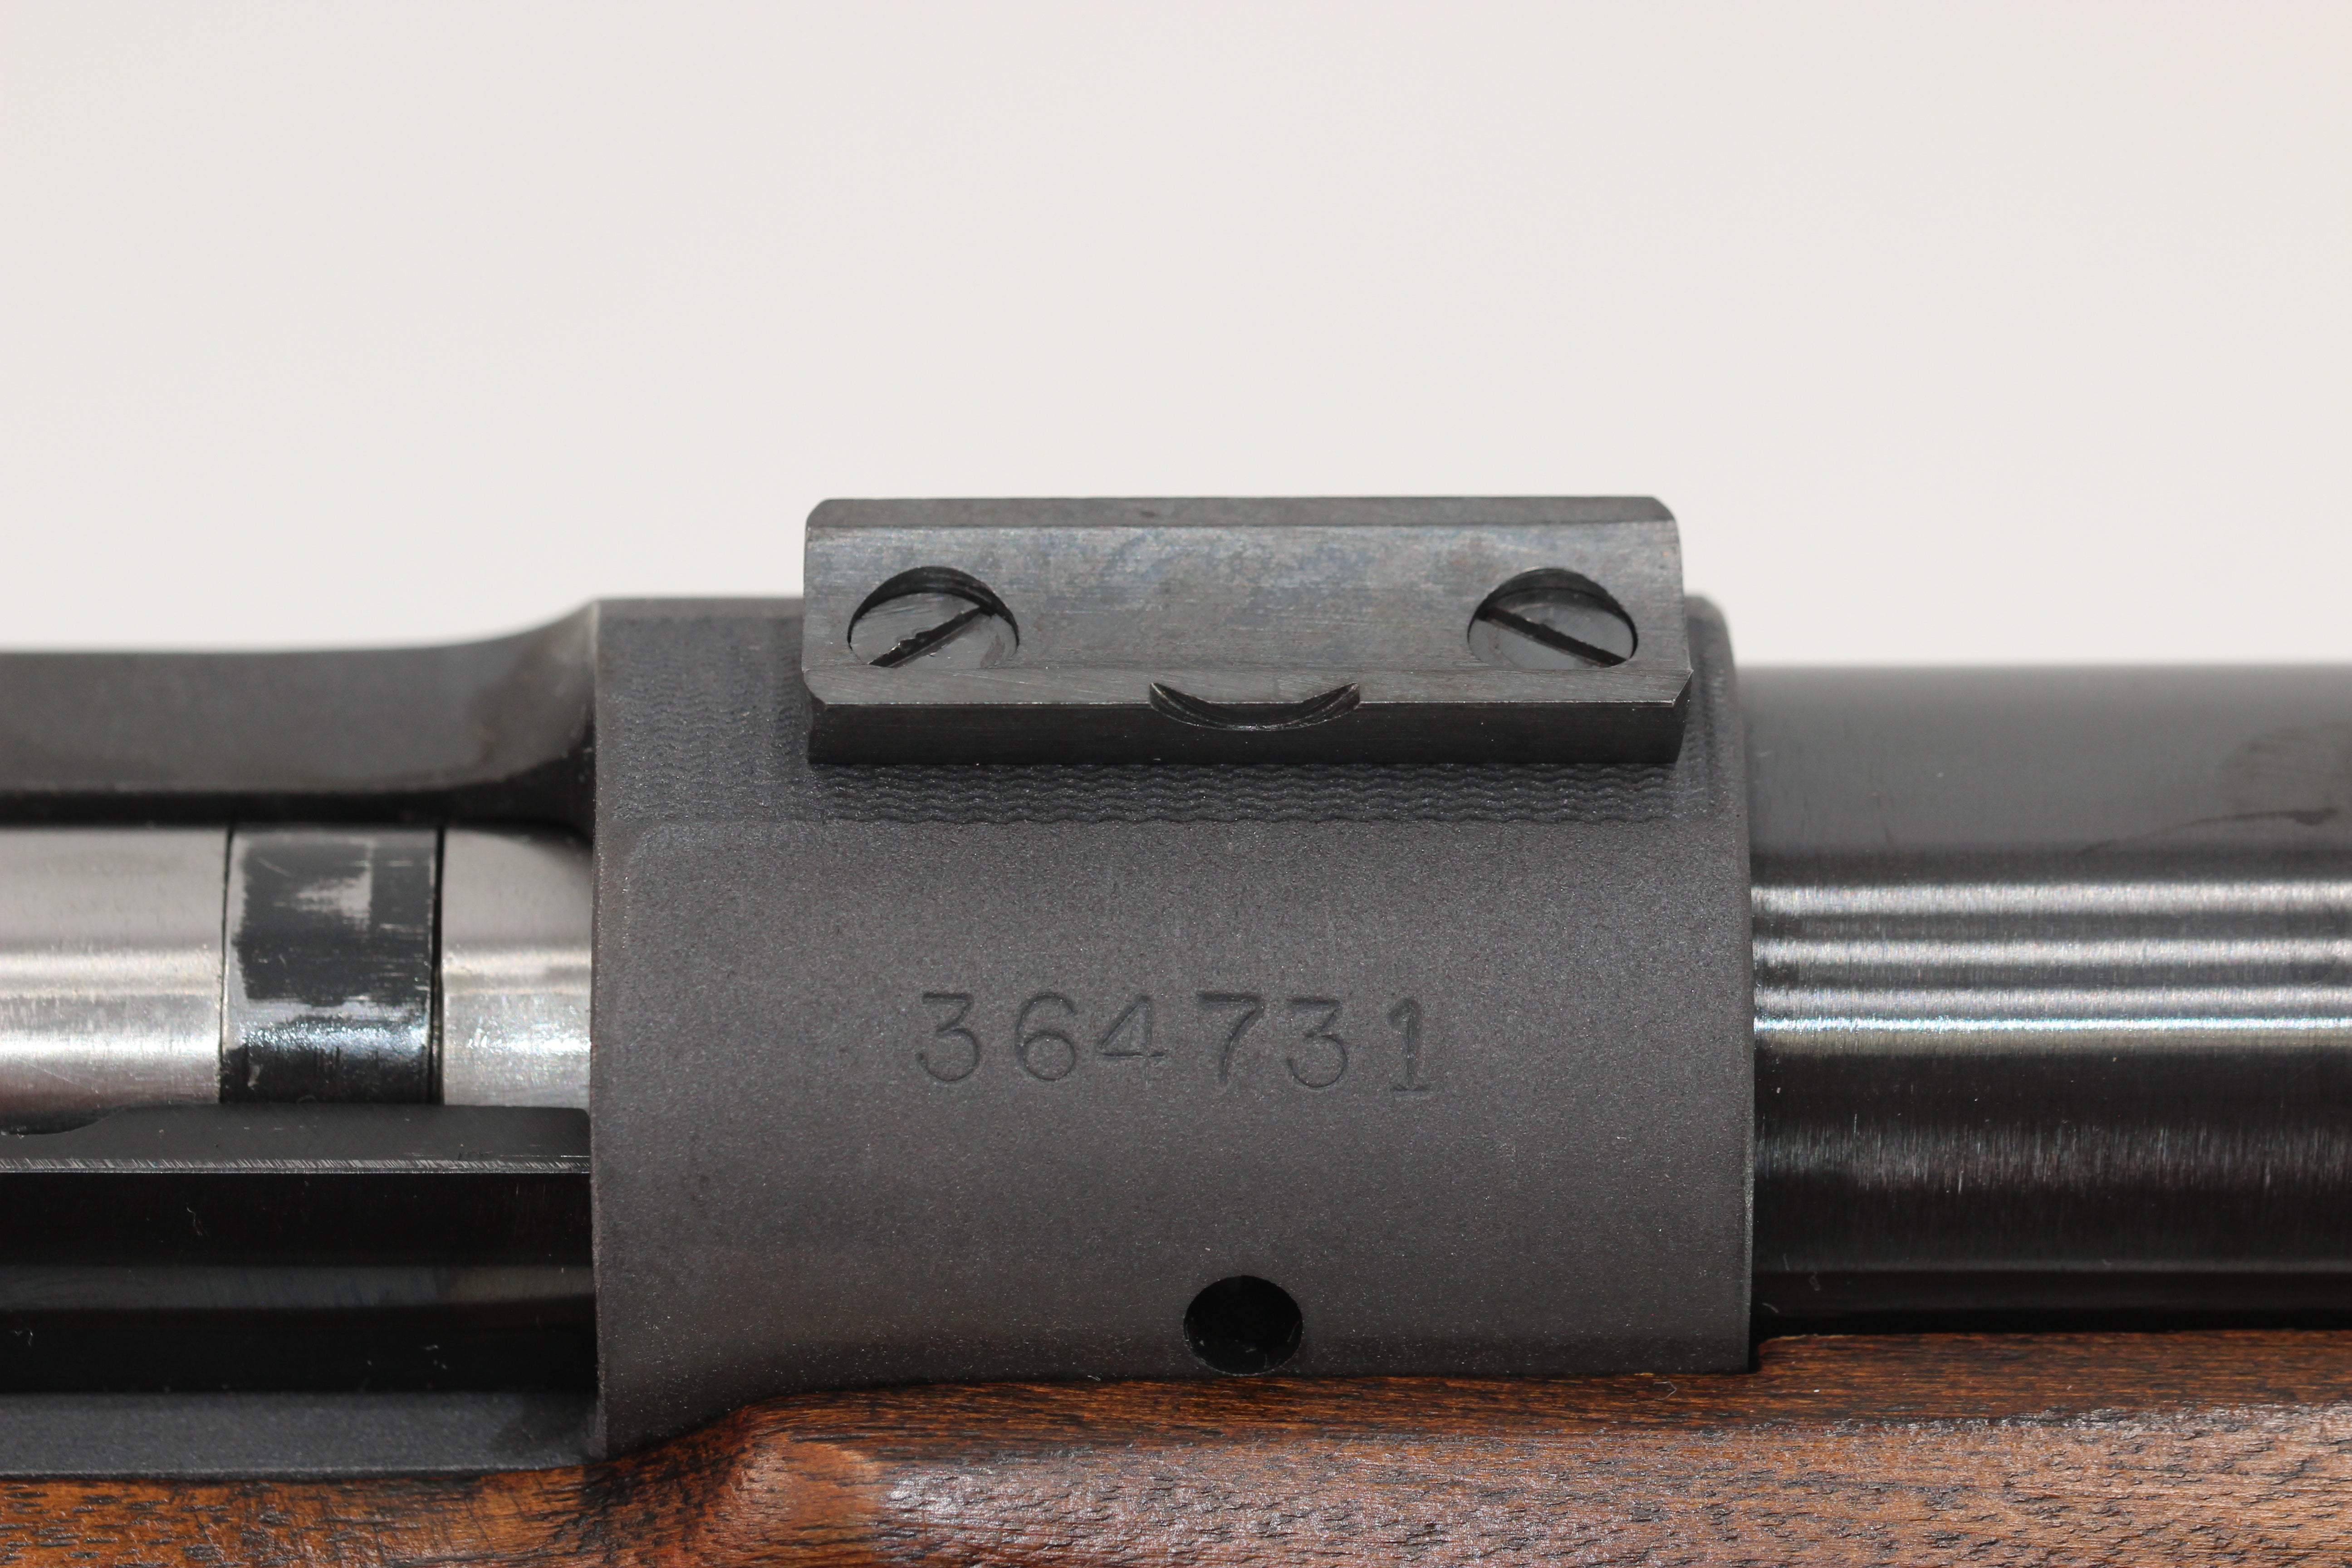 .30-06 Springfield Target Rifle - 1956